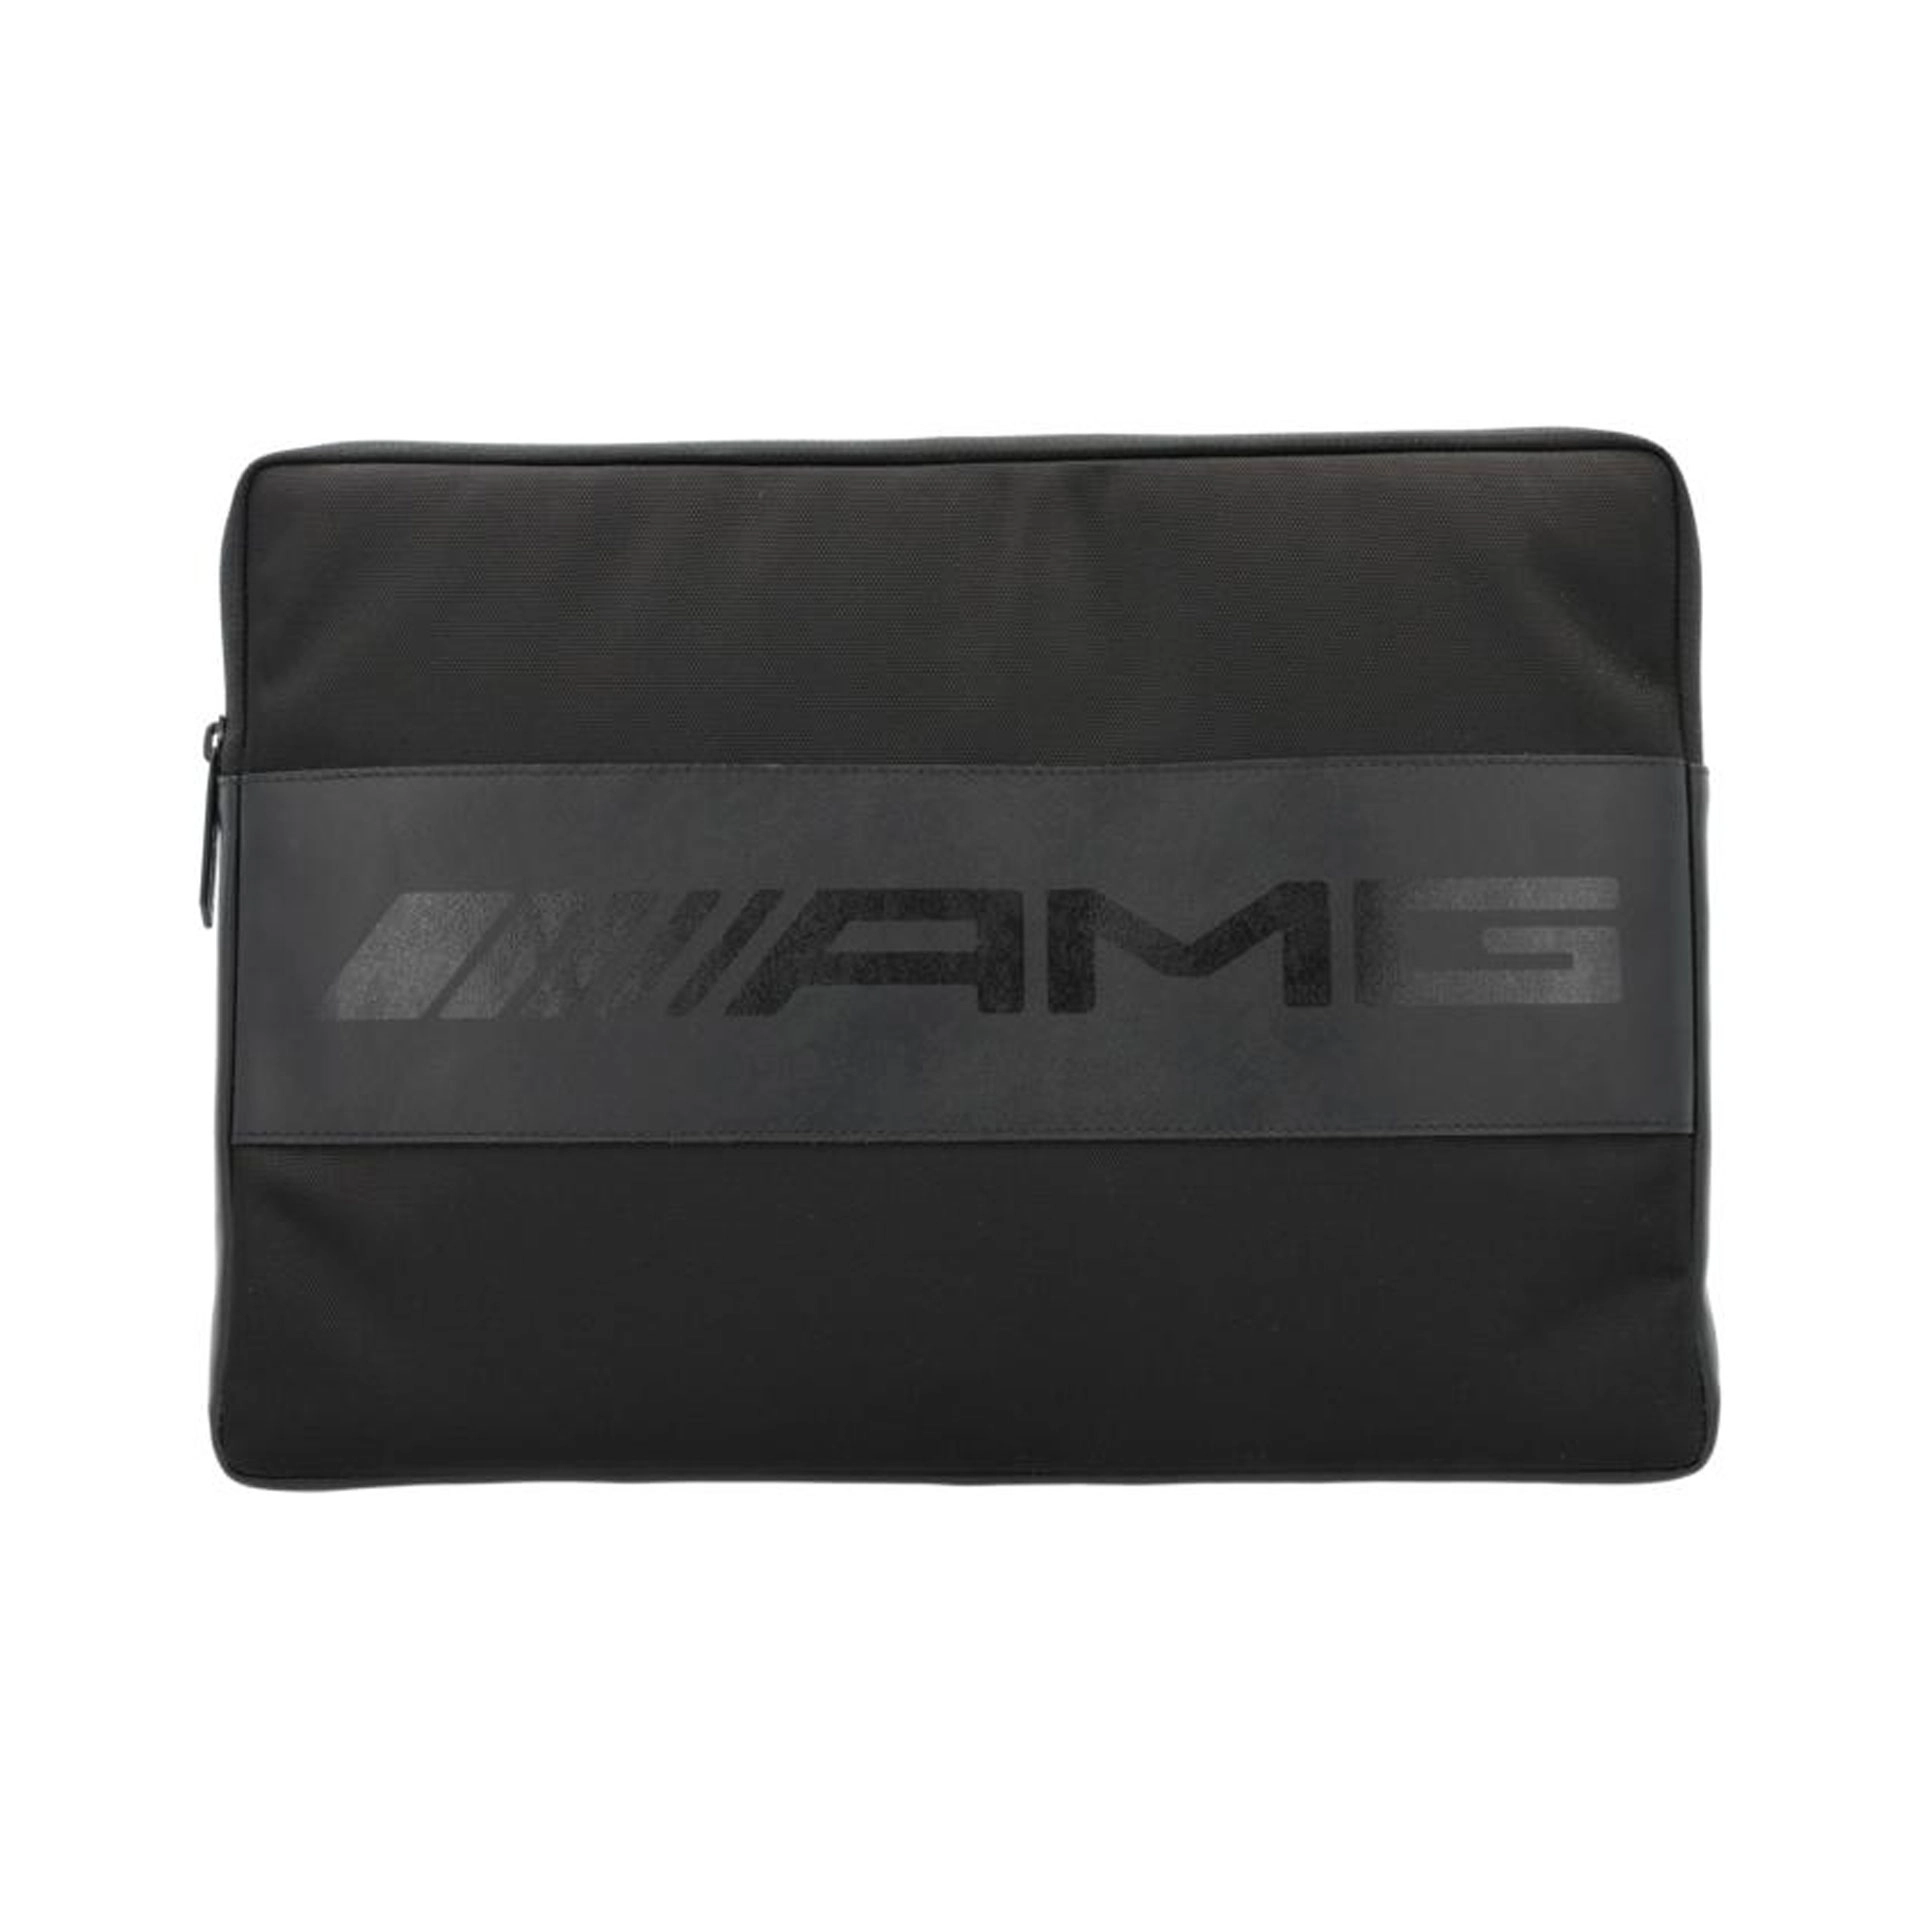 AMG Laptophülle schwarz Rindleder/Nylon bis 13 Zoll B66959322